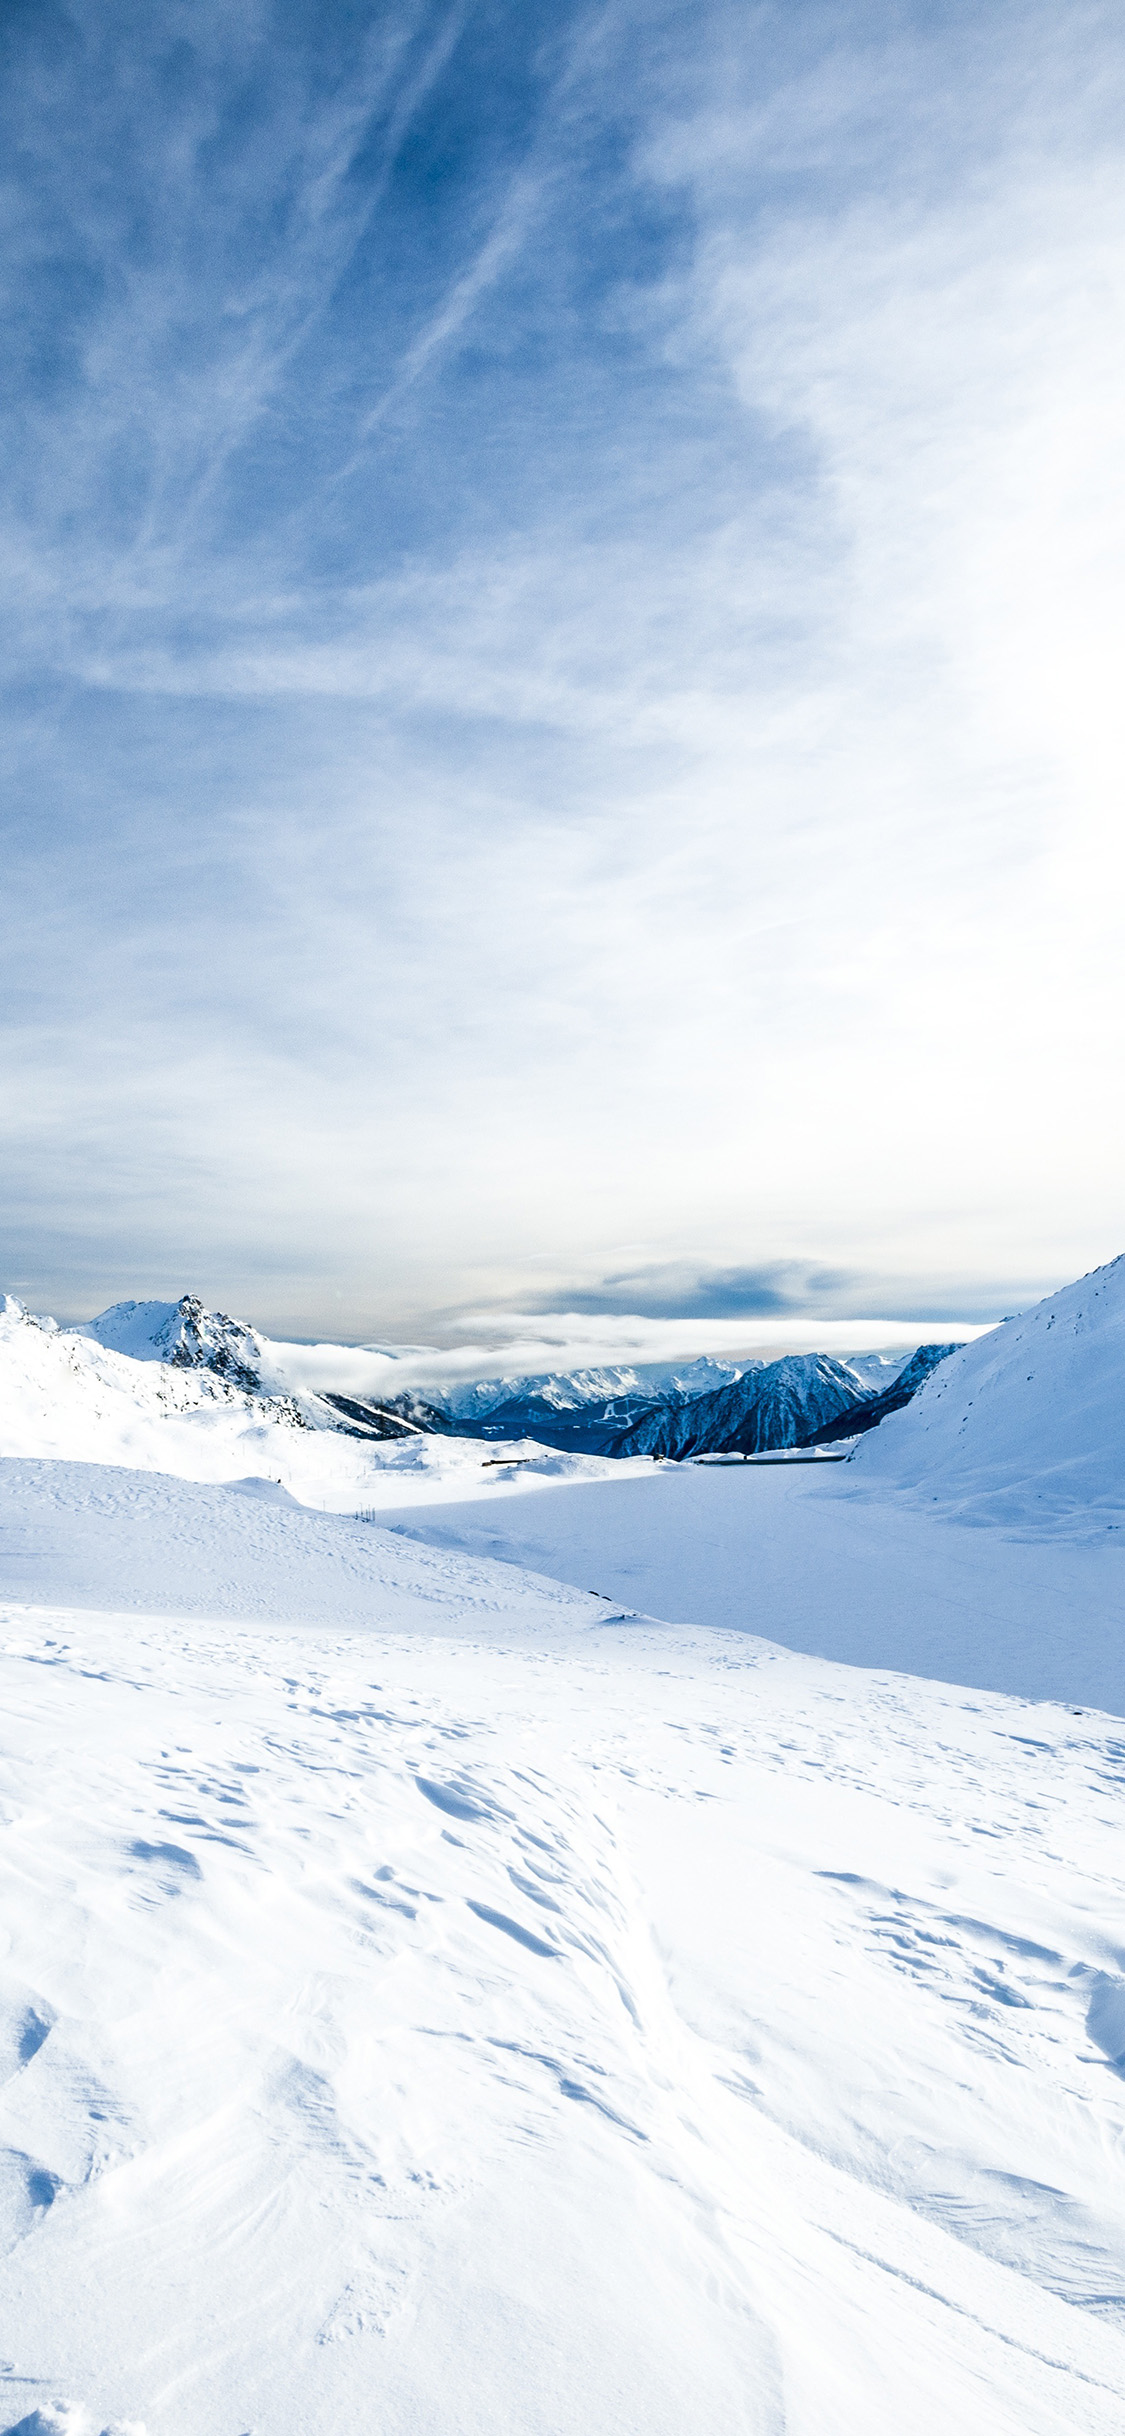 iPhone X wallpaper. winter snow mountain white nature